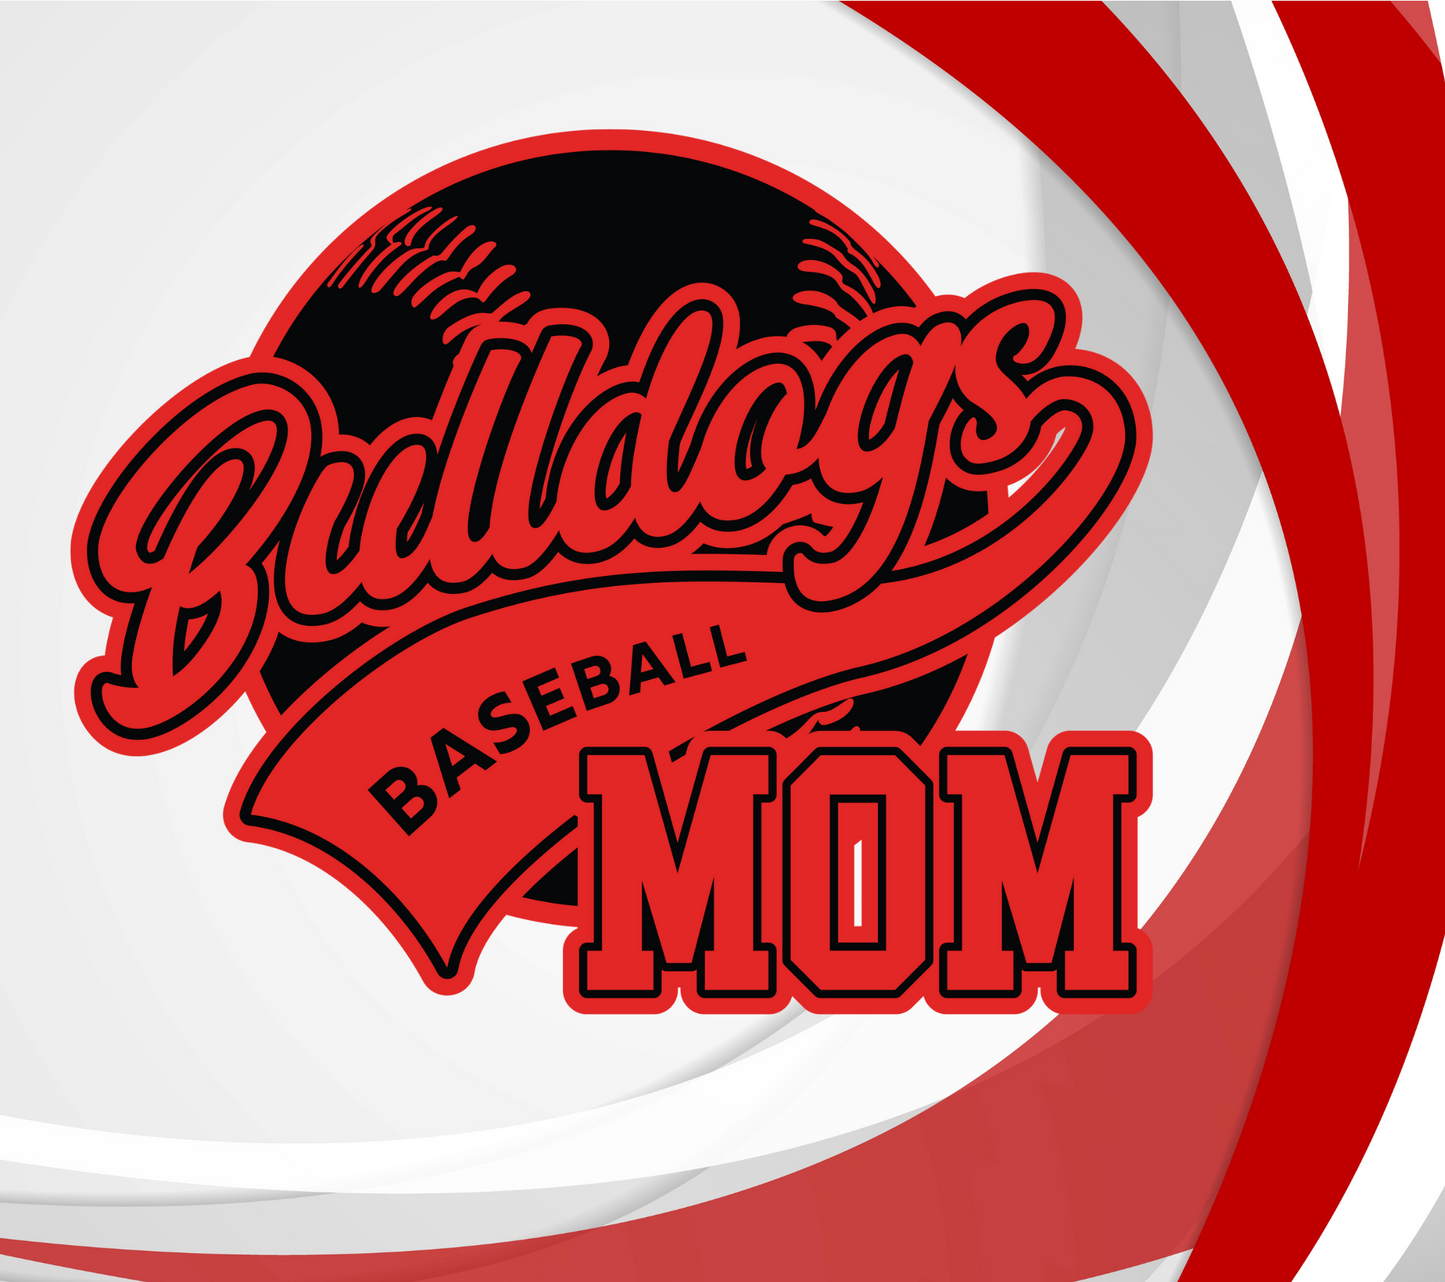 Bulldog baseball mom 2